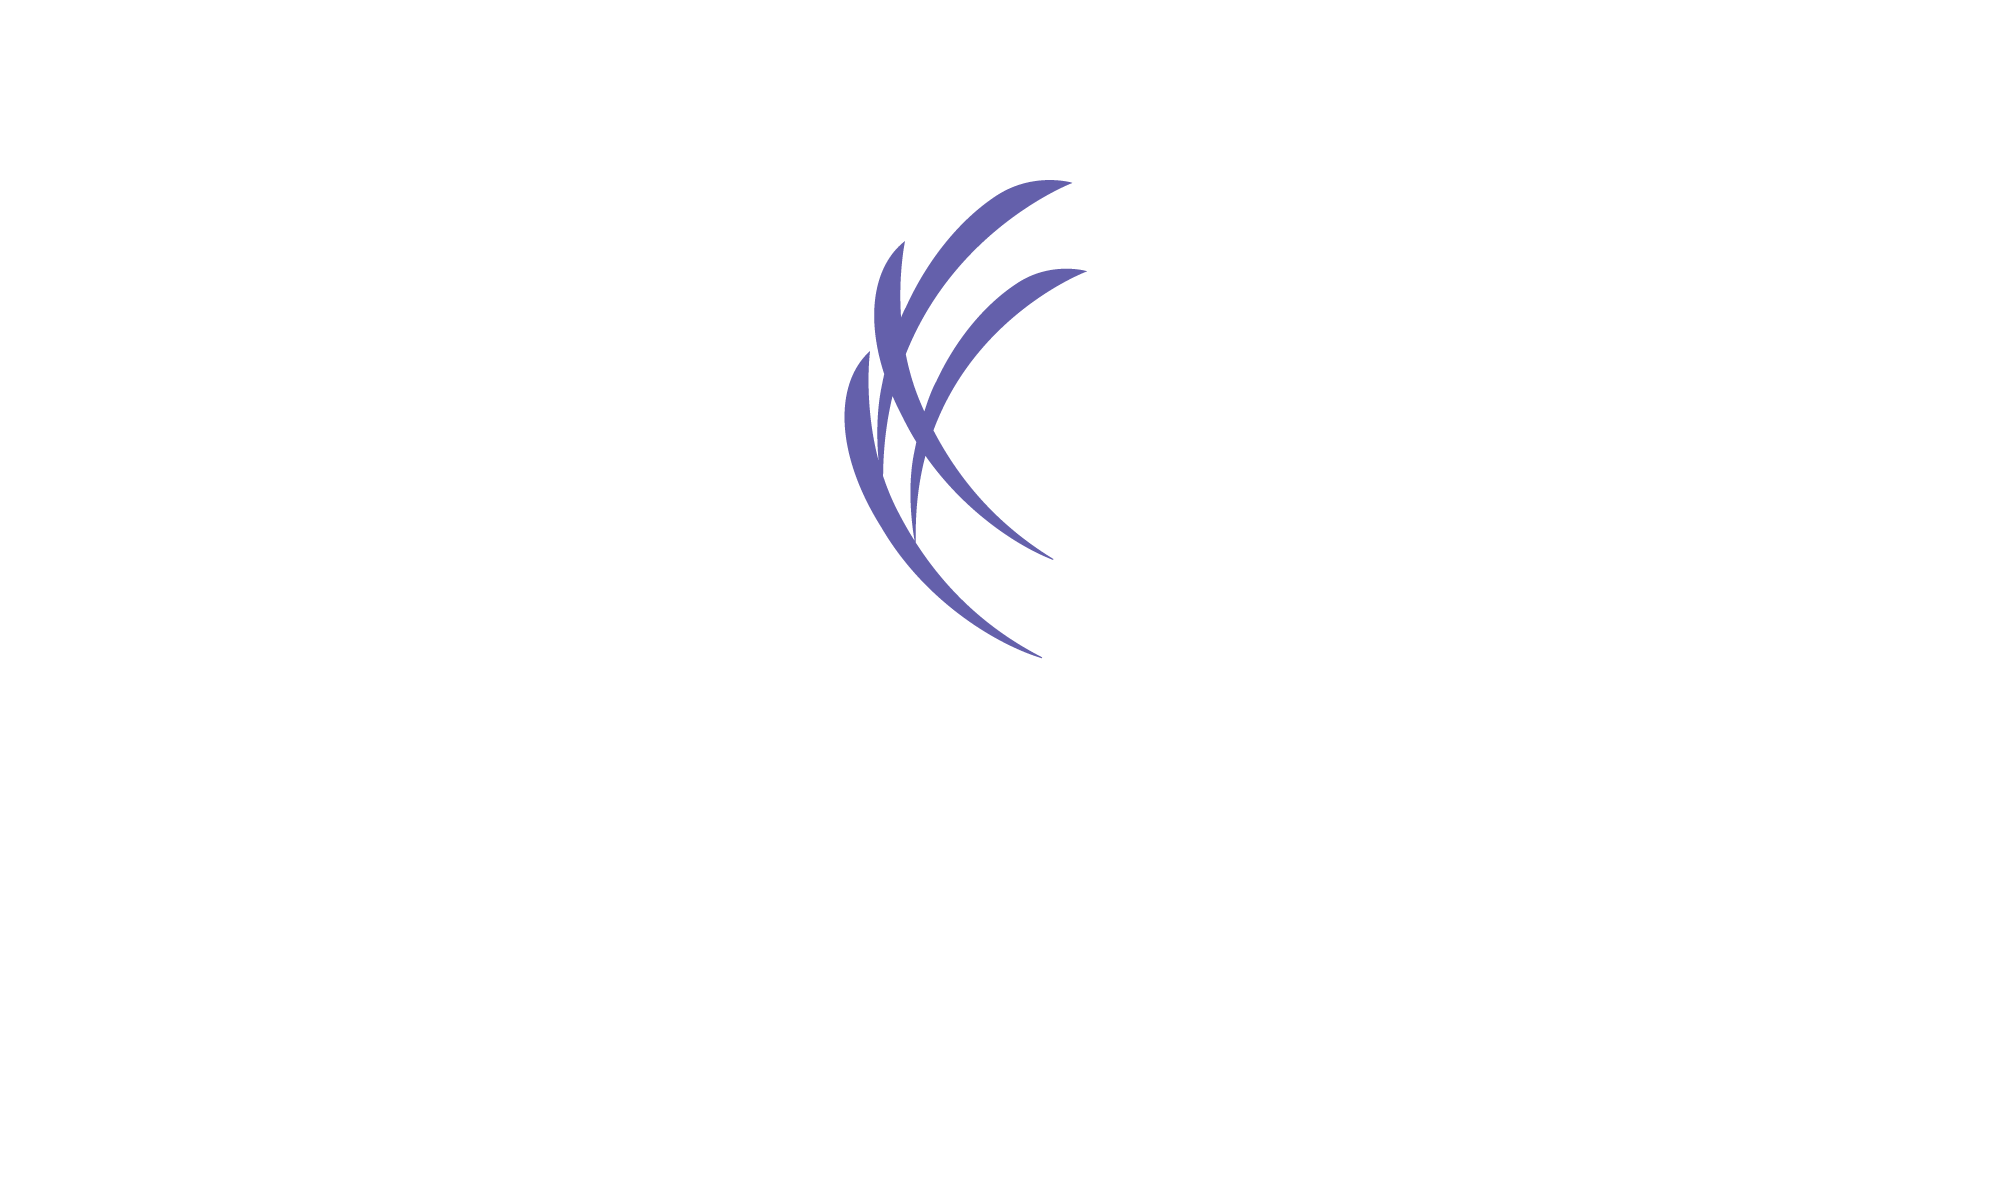 Kaptivate-logo-stacked-reverse-no-tagline